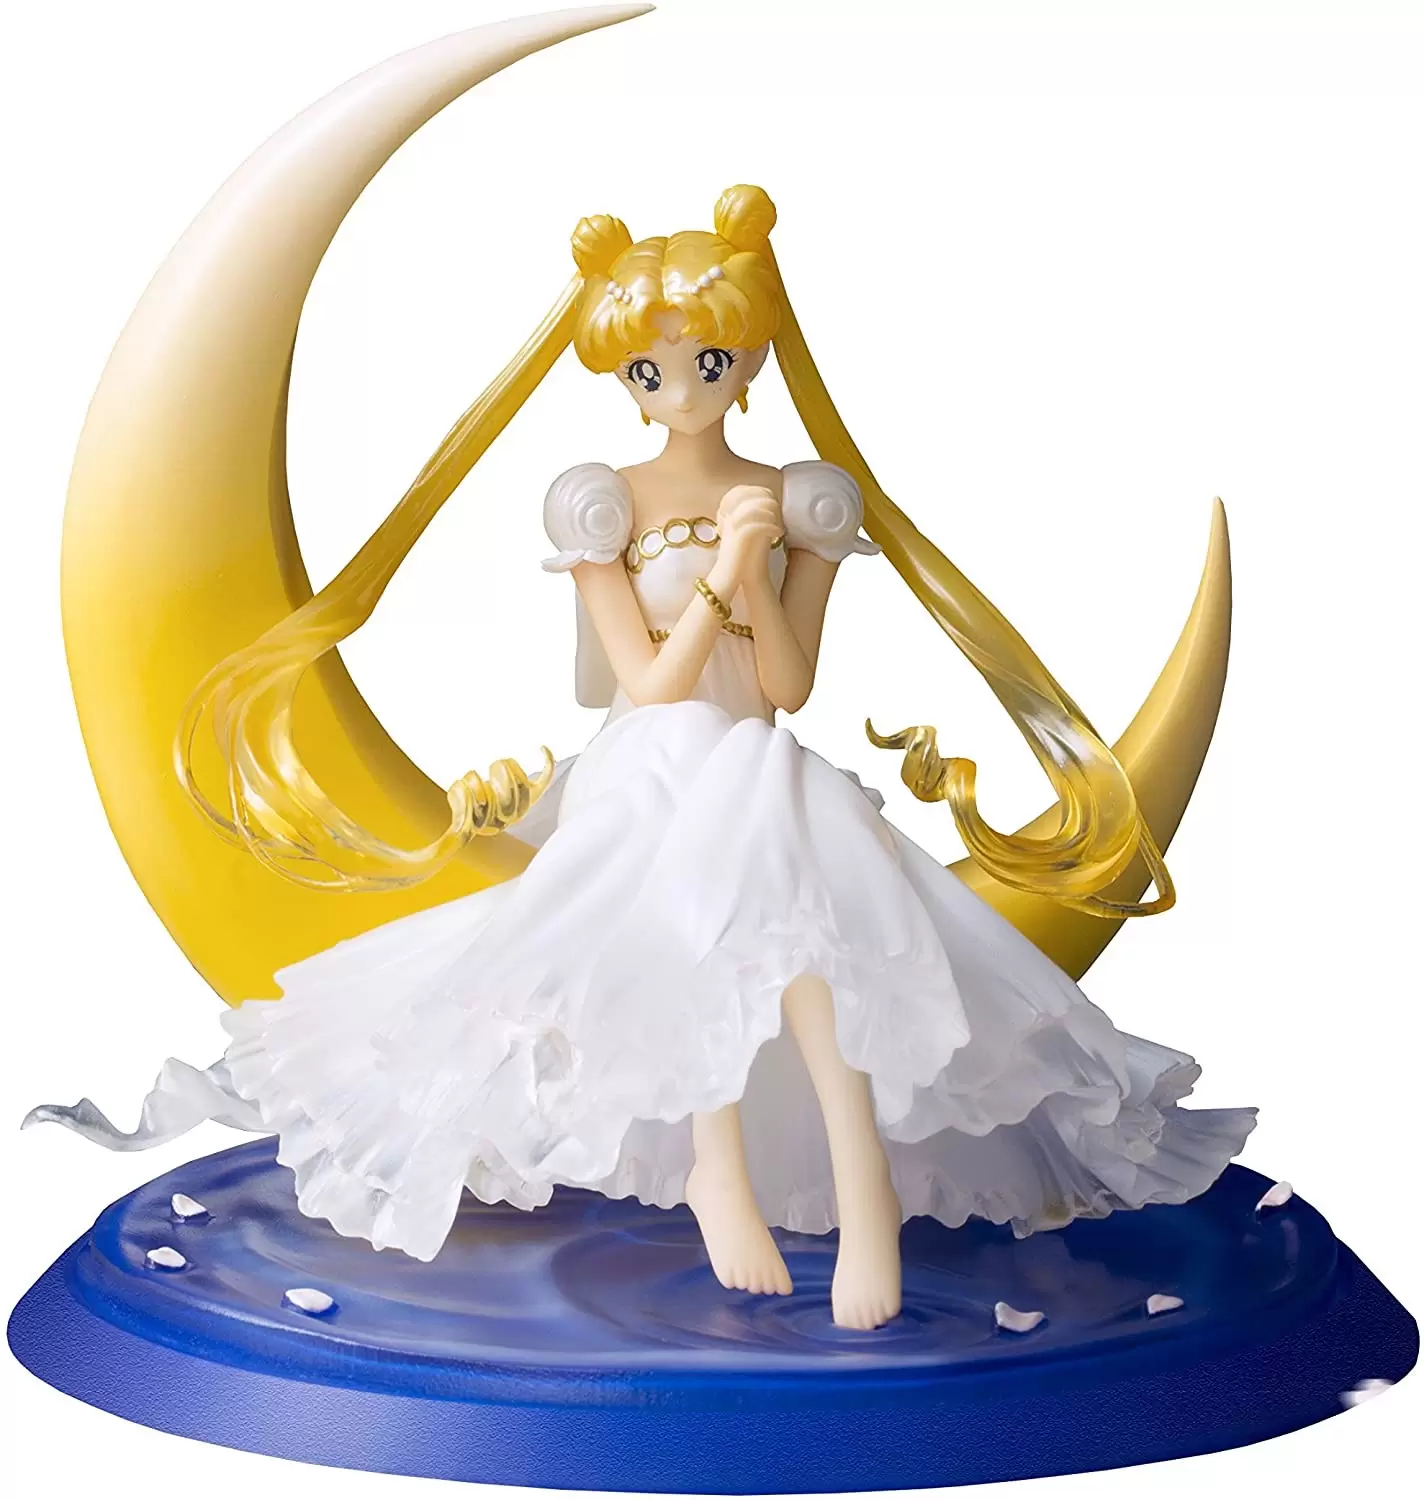 Figuarts ZERO - Sailor Moon - Princess Serenity